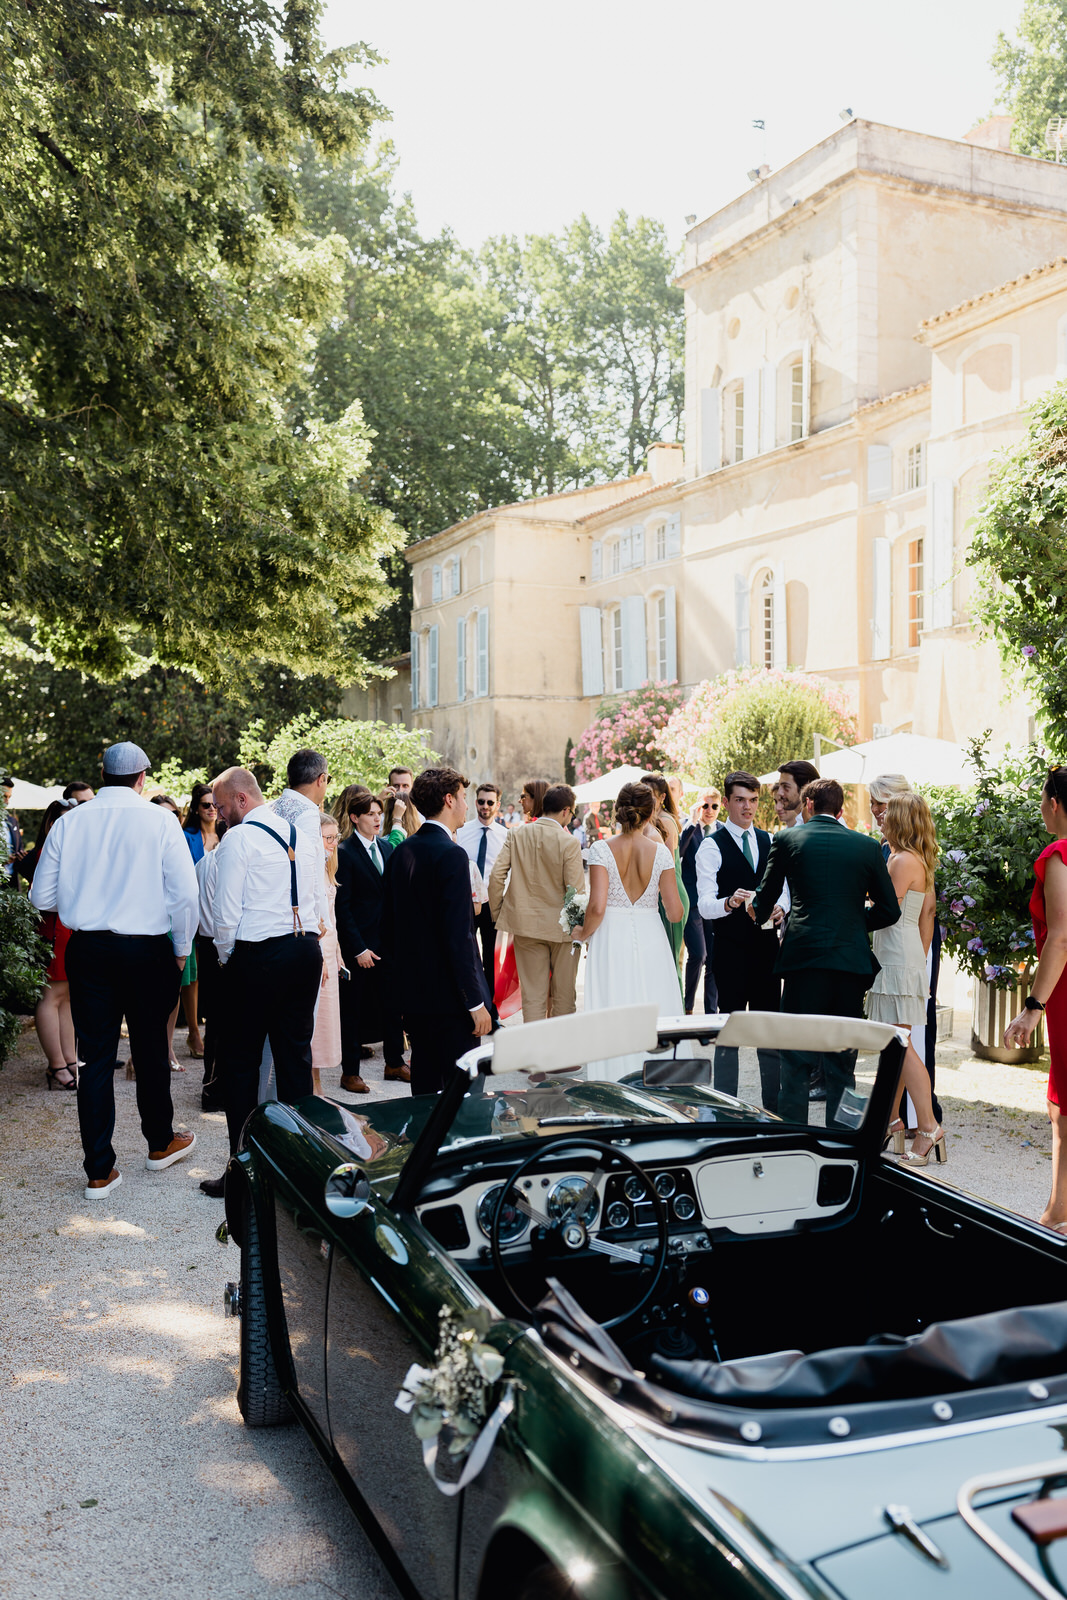 Catholic wedding in south of France